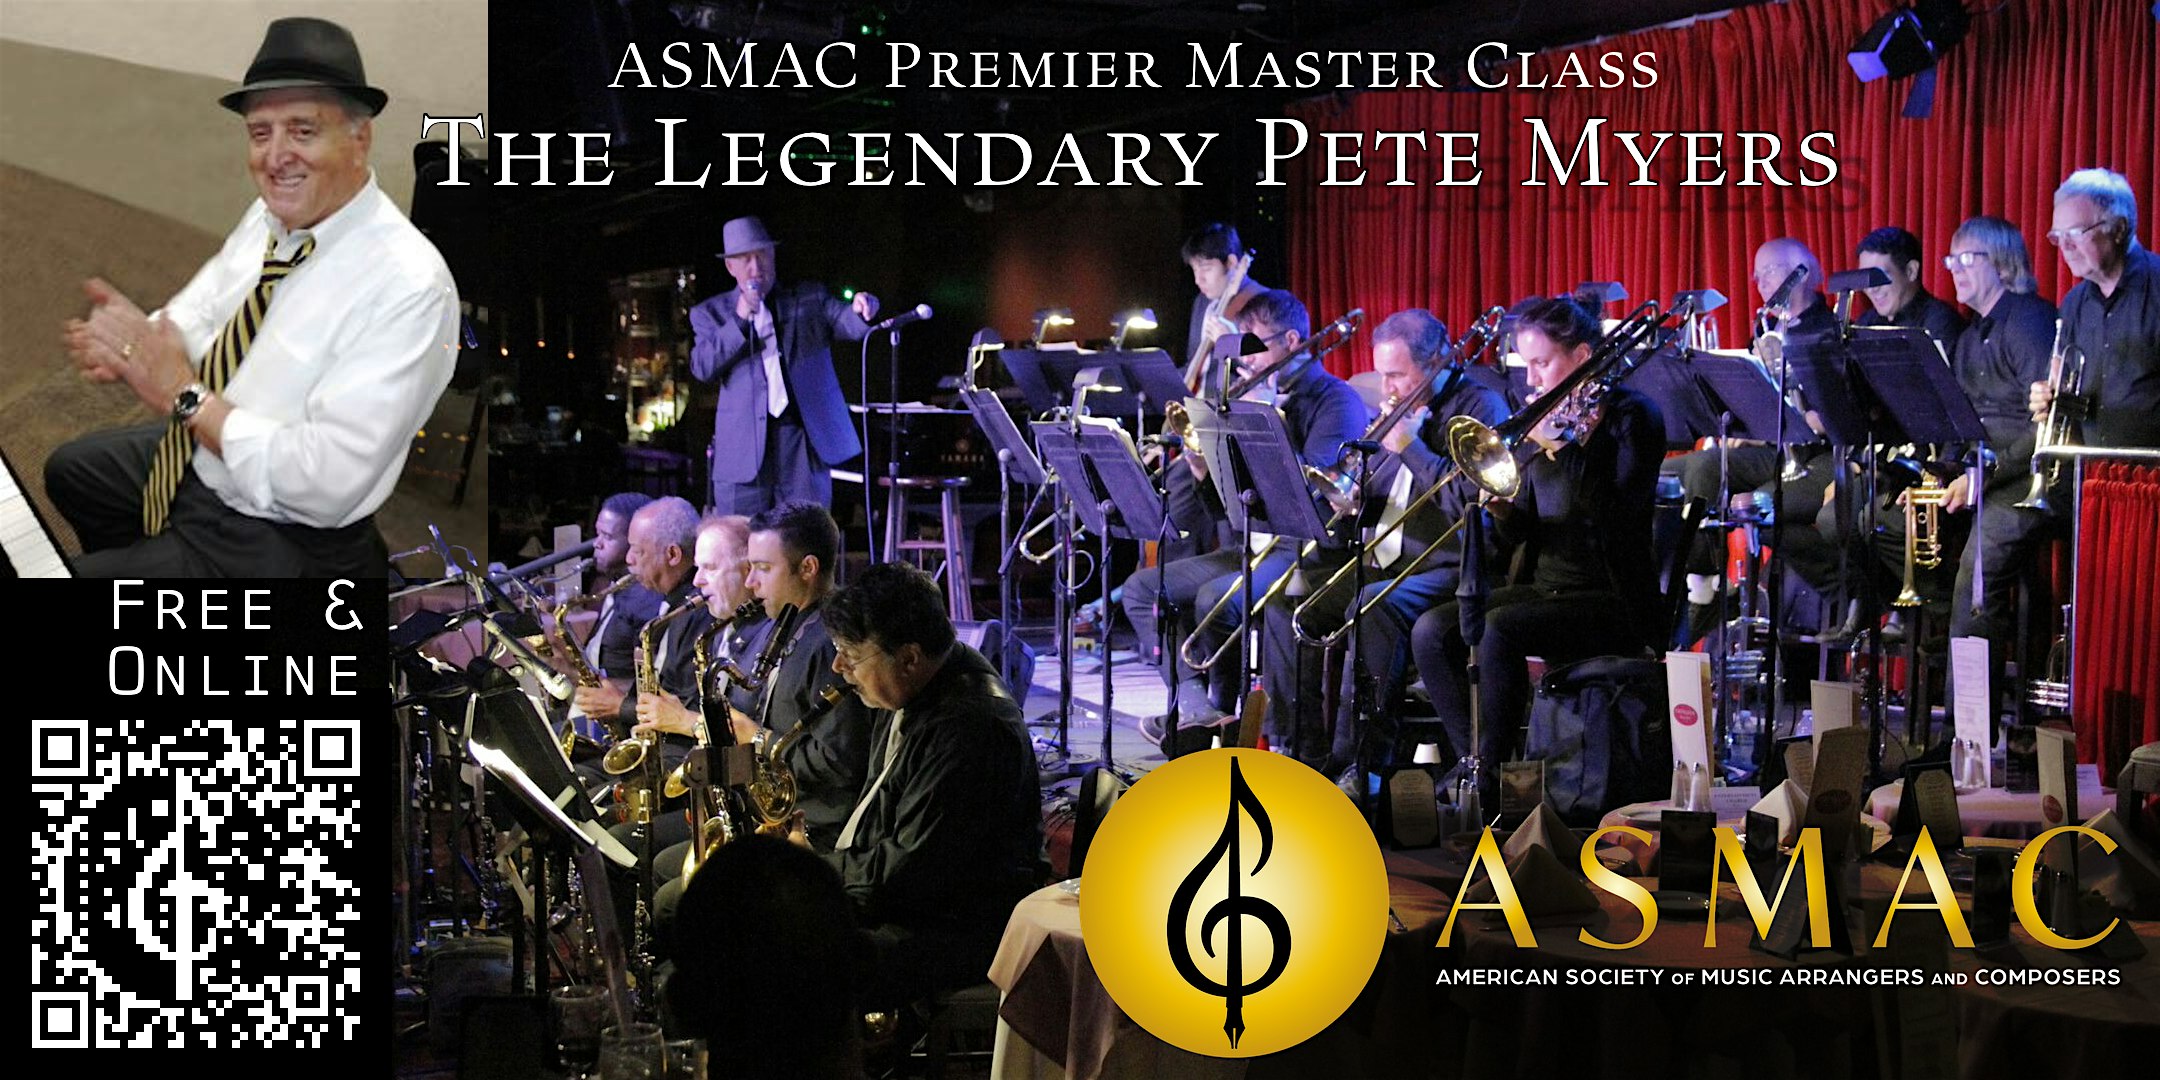 ASMAC Premier Masterclass w/the Legendary Pete Myers, host Sylvester Rivers